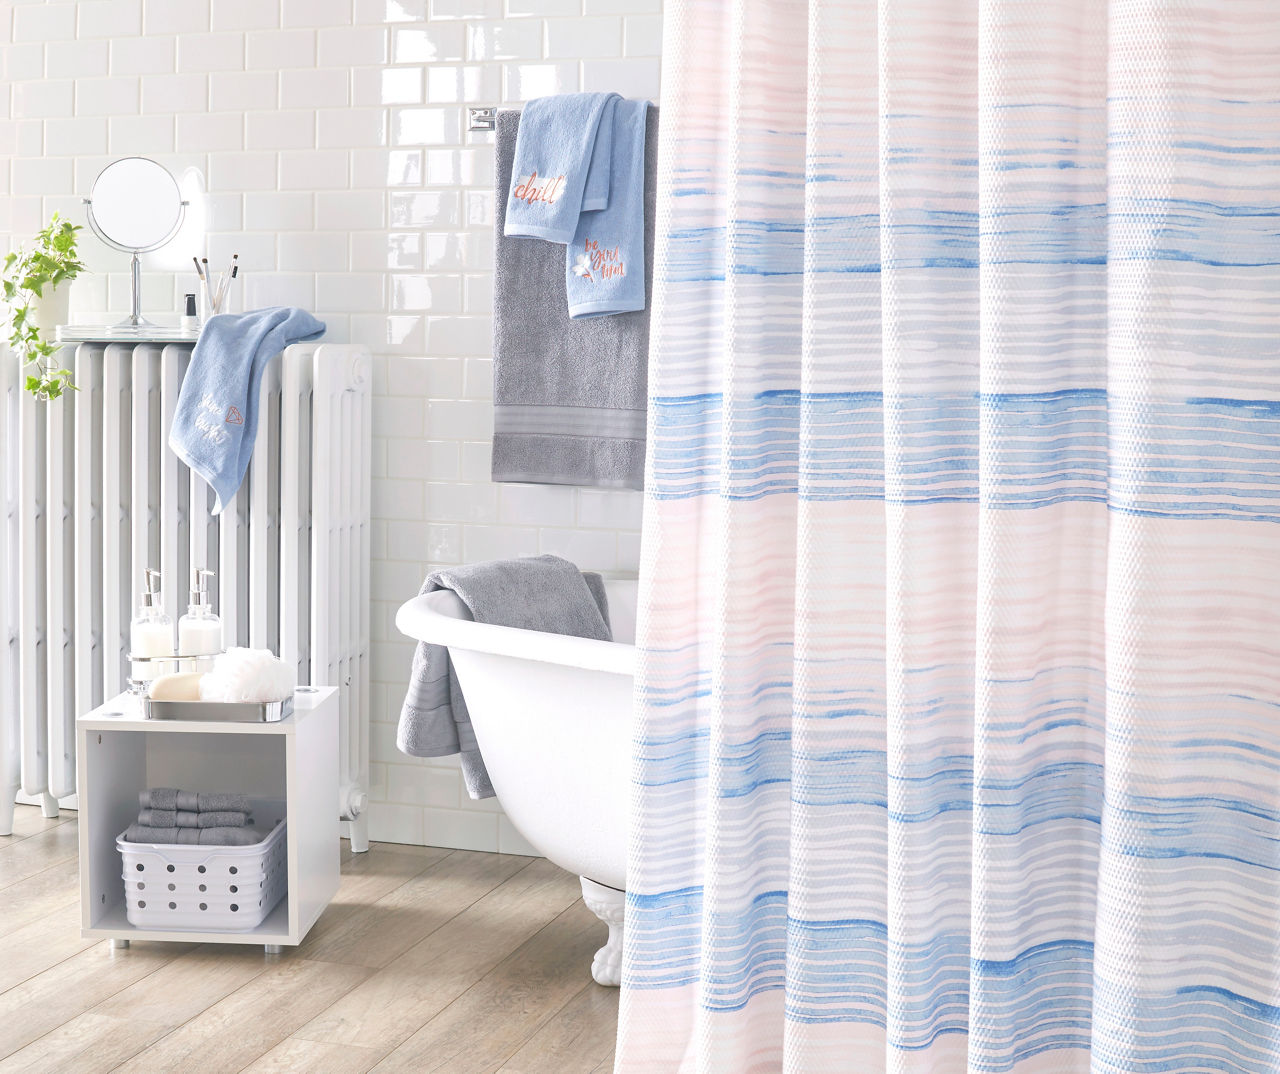 Living Colors Sky Blue Bath Towel